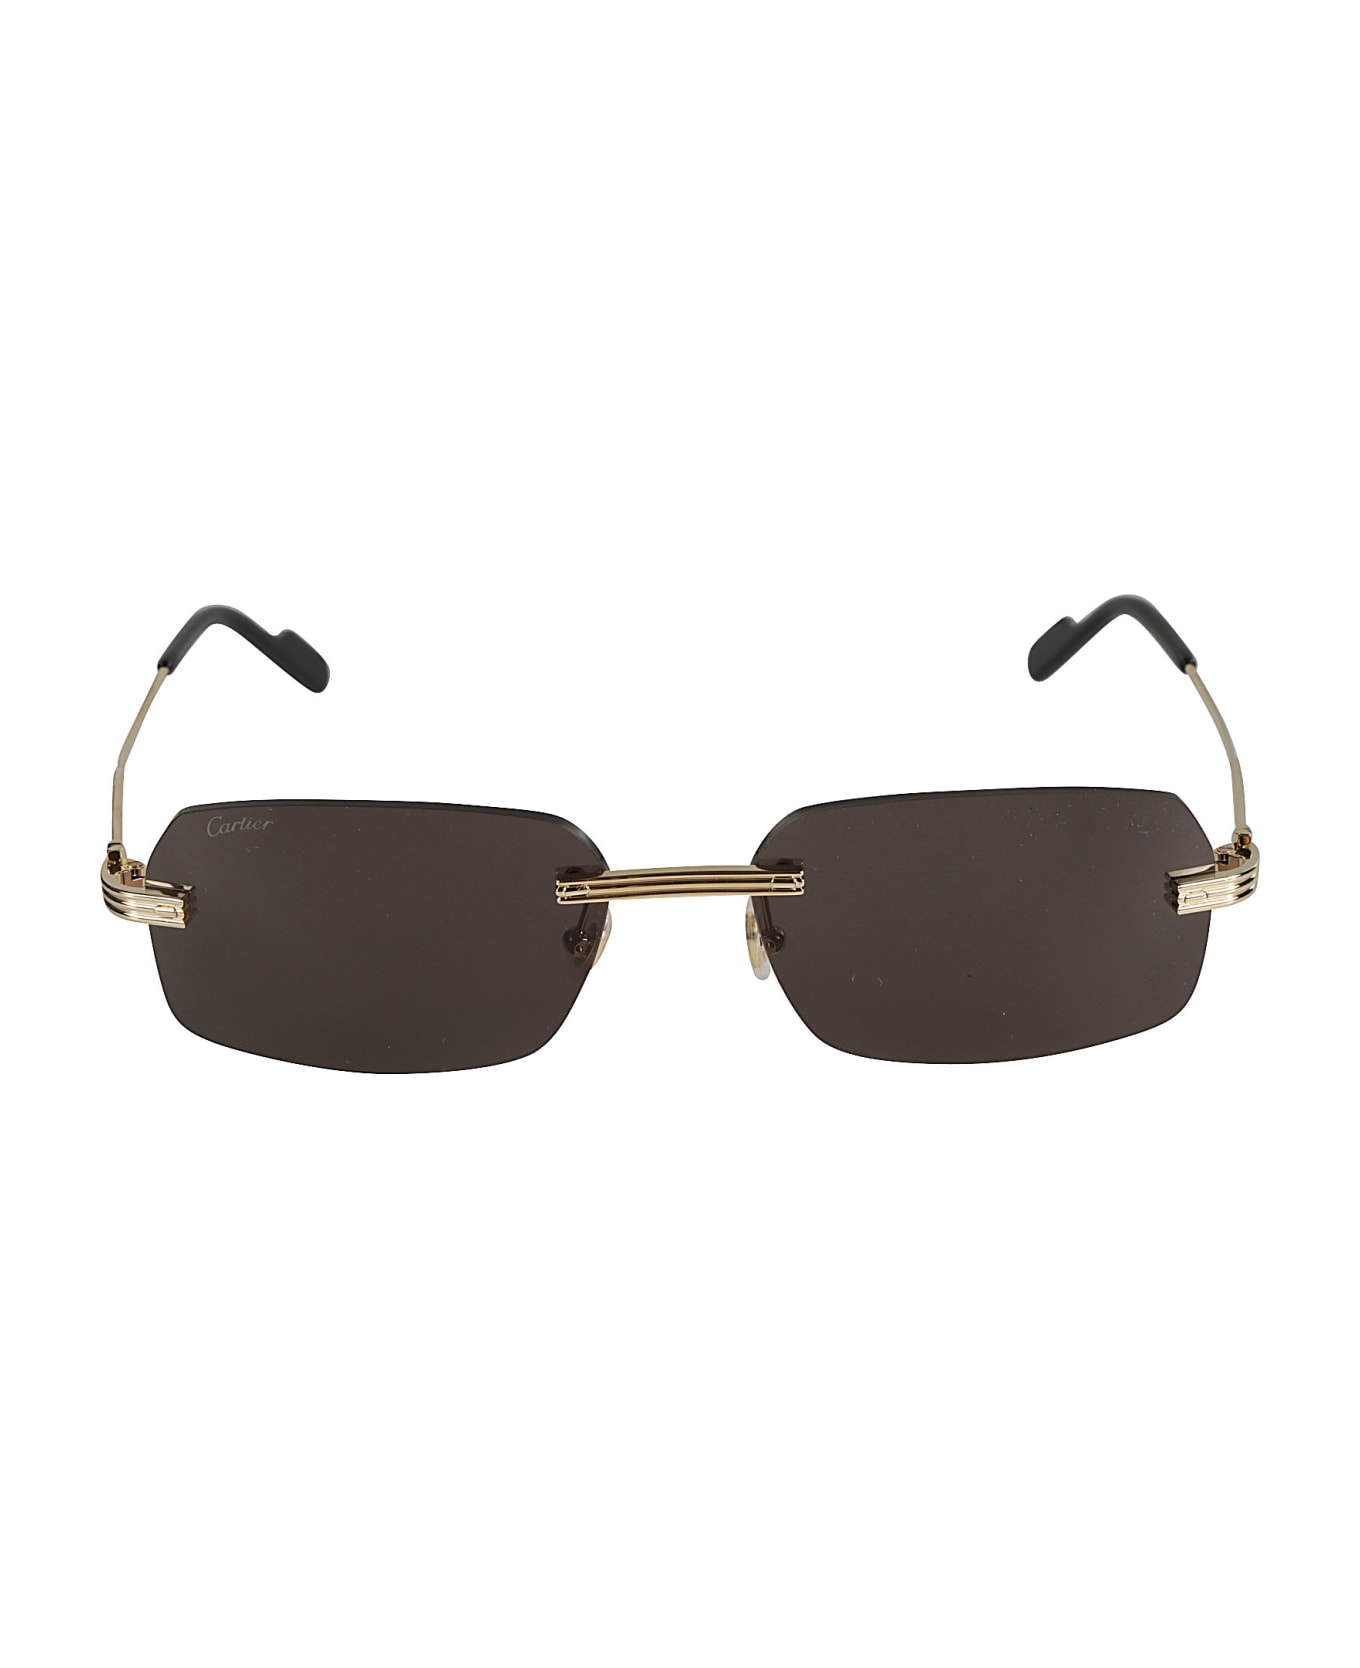 Cartier ZVN1C0 Straight Bridge Rimless Sunglasses Gg0877s - Gold/Grey